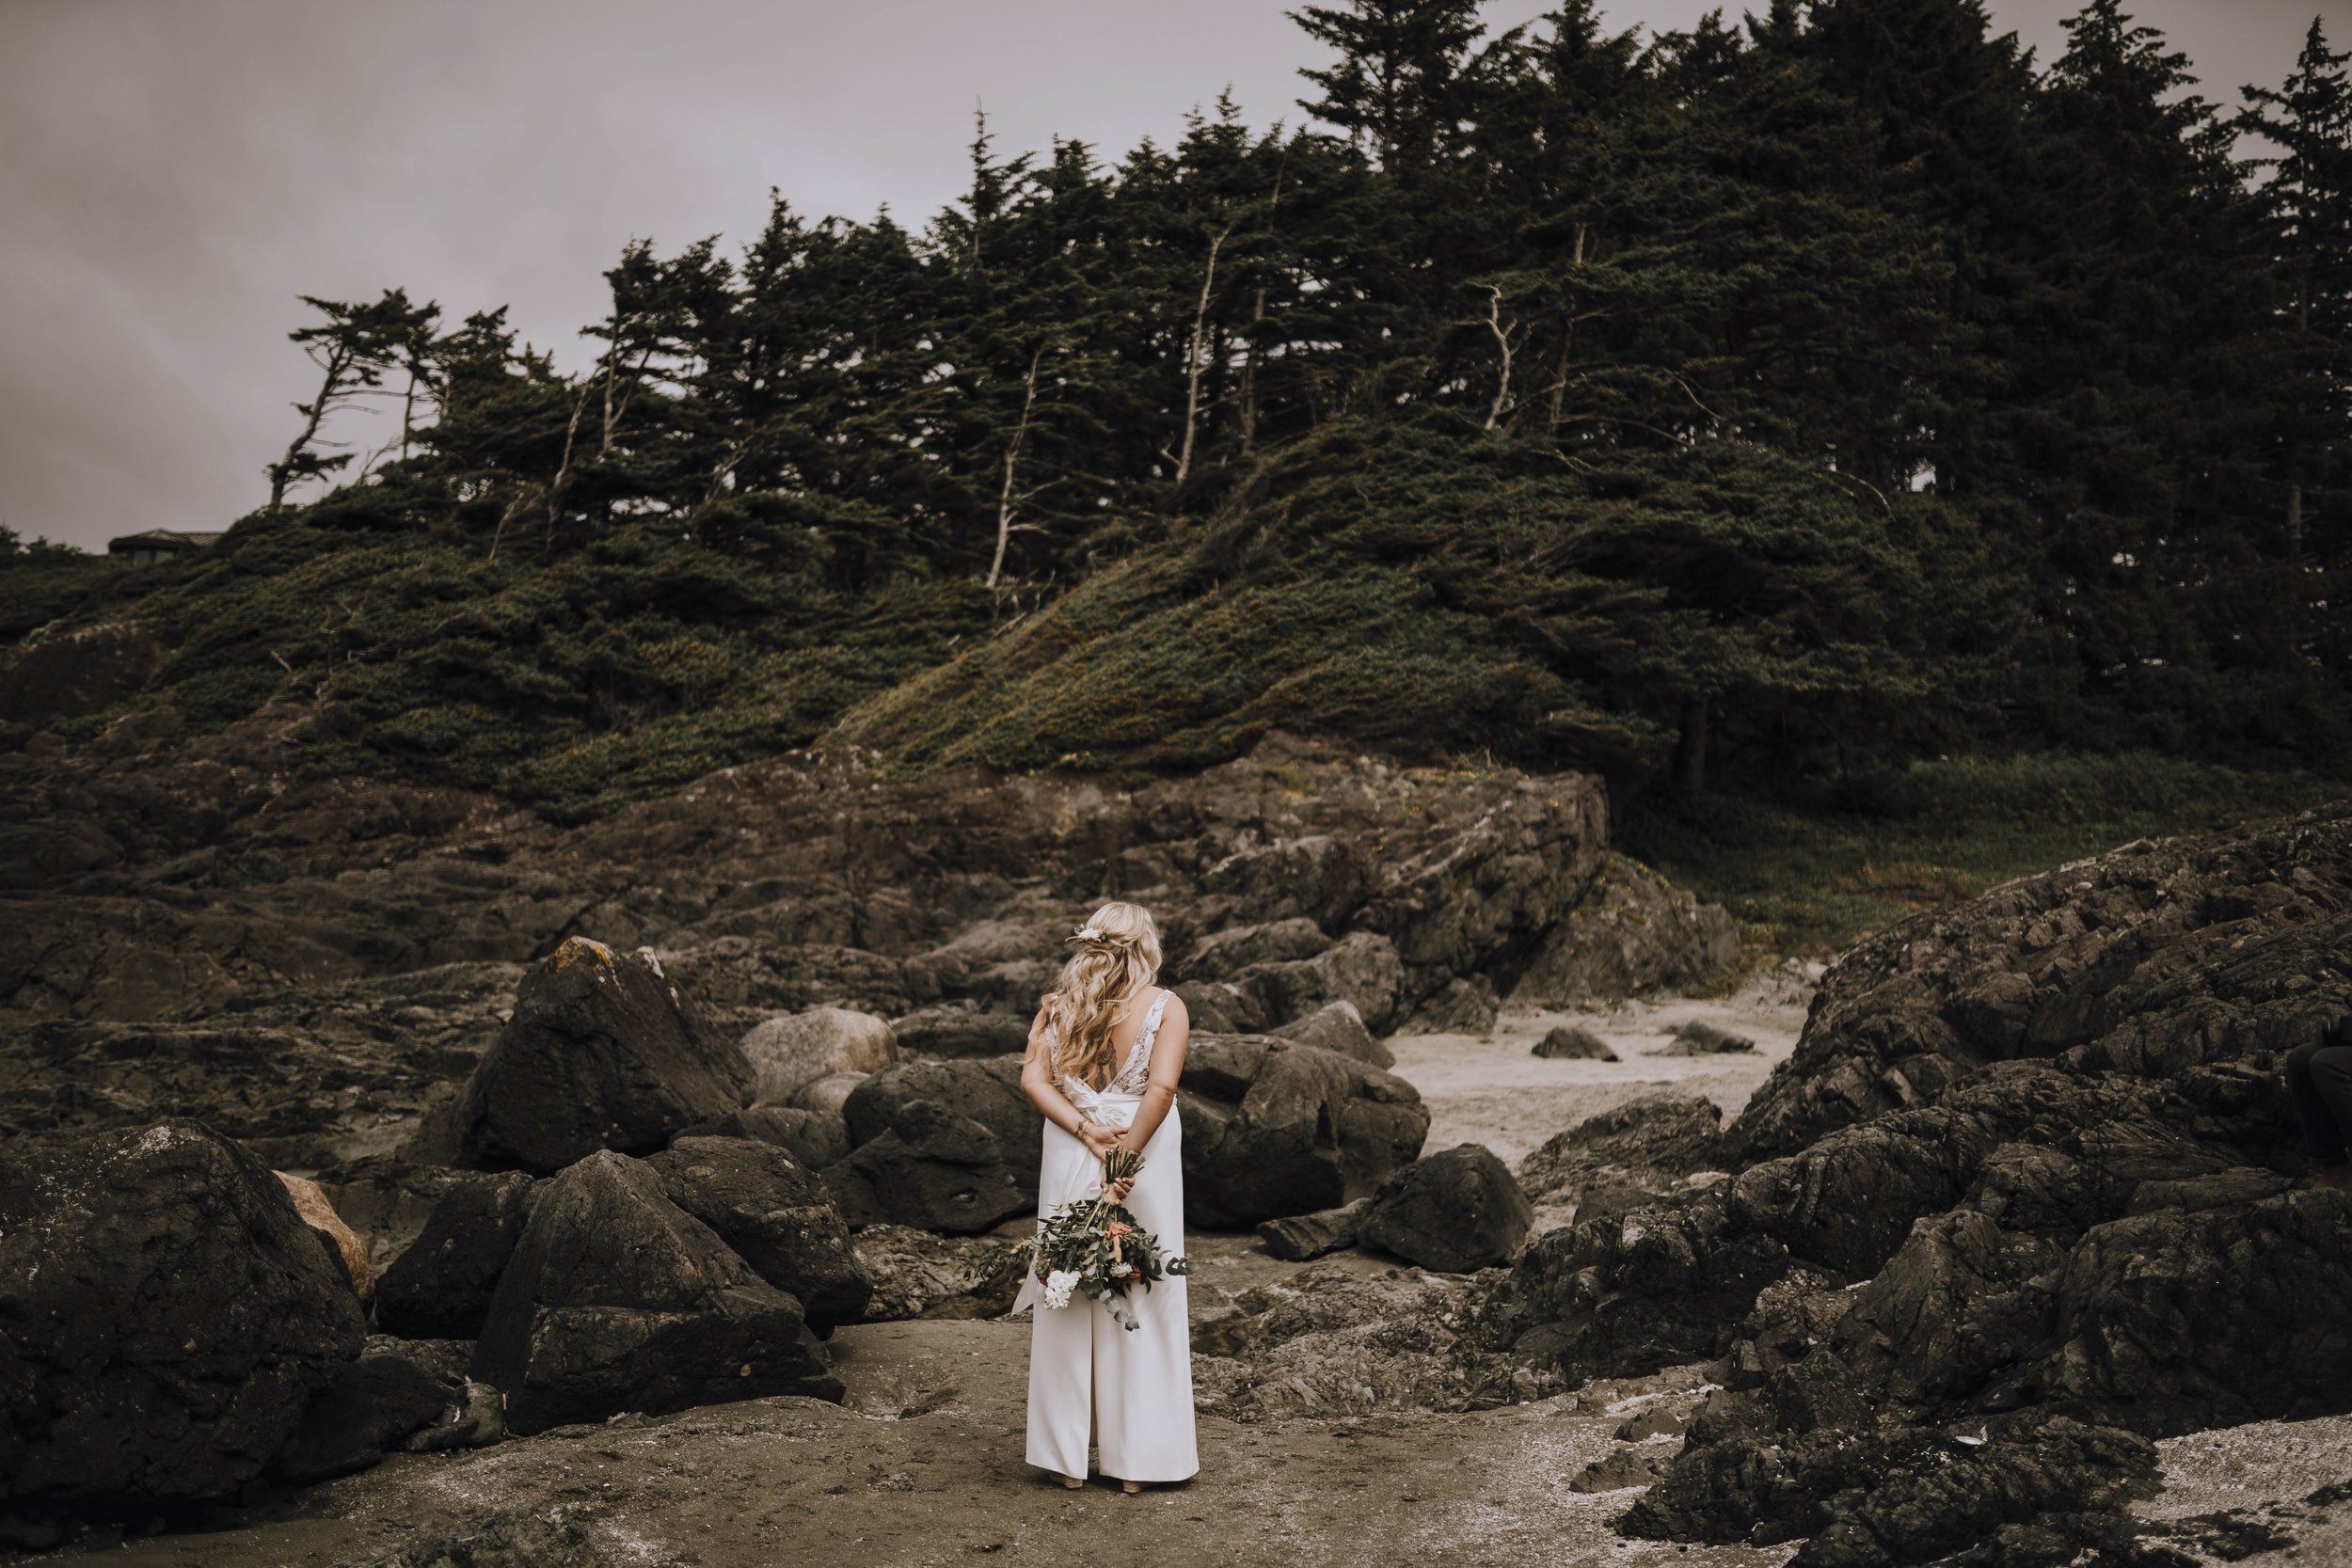 Jamie and Brad wedding - Tofino Vancouver Island British Columbia - Elyse Anna Photography-00793.jpg